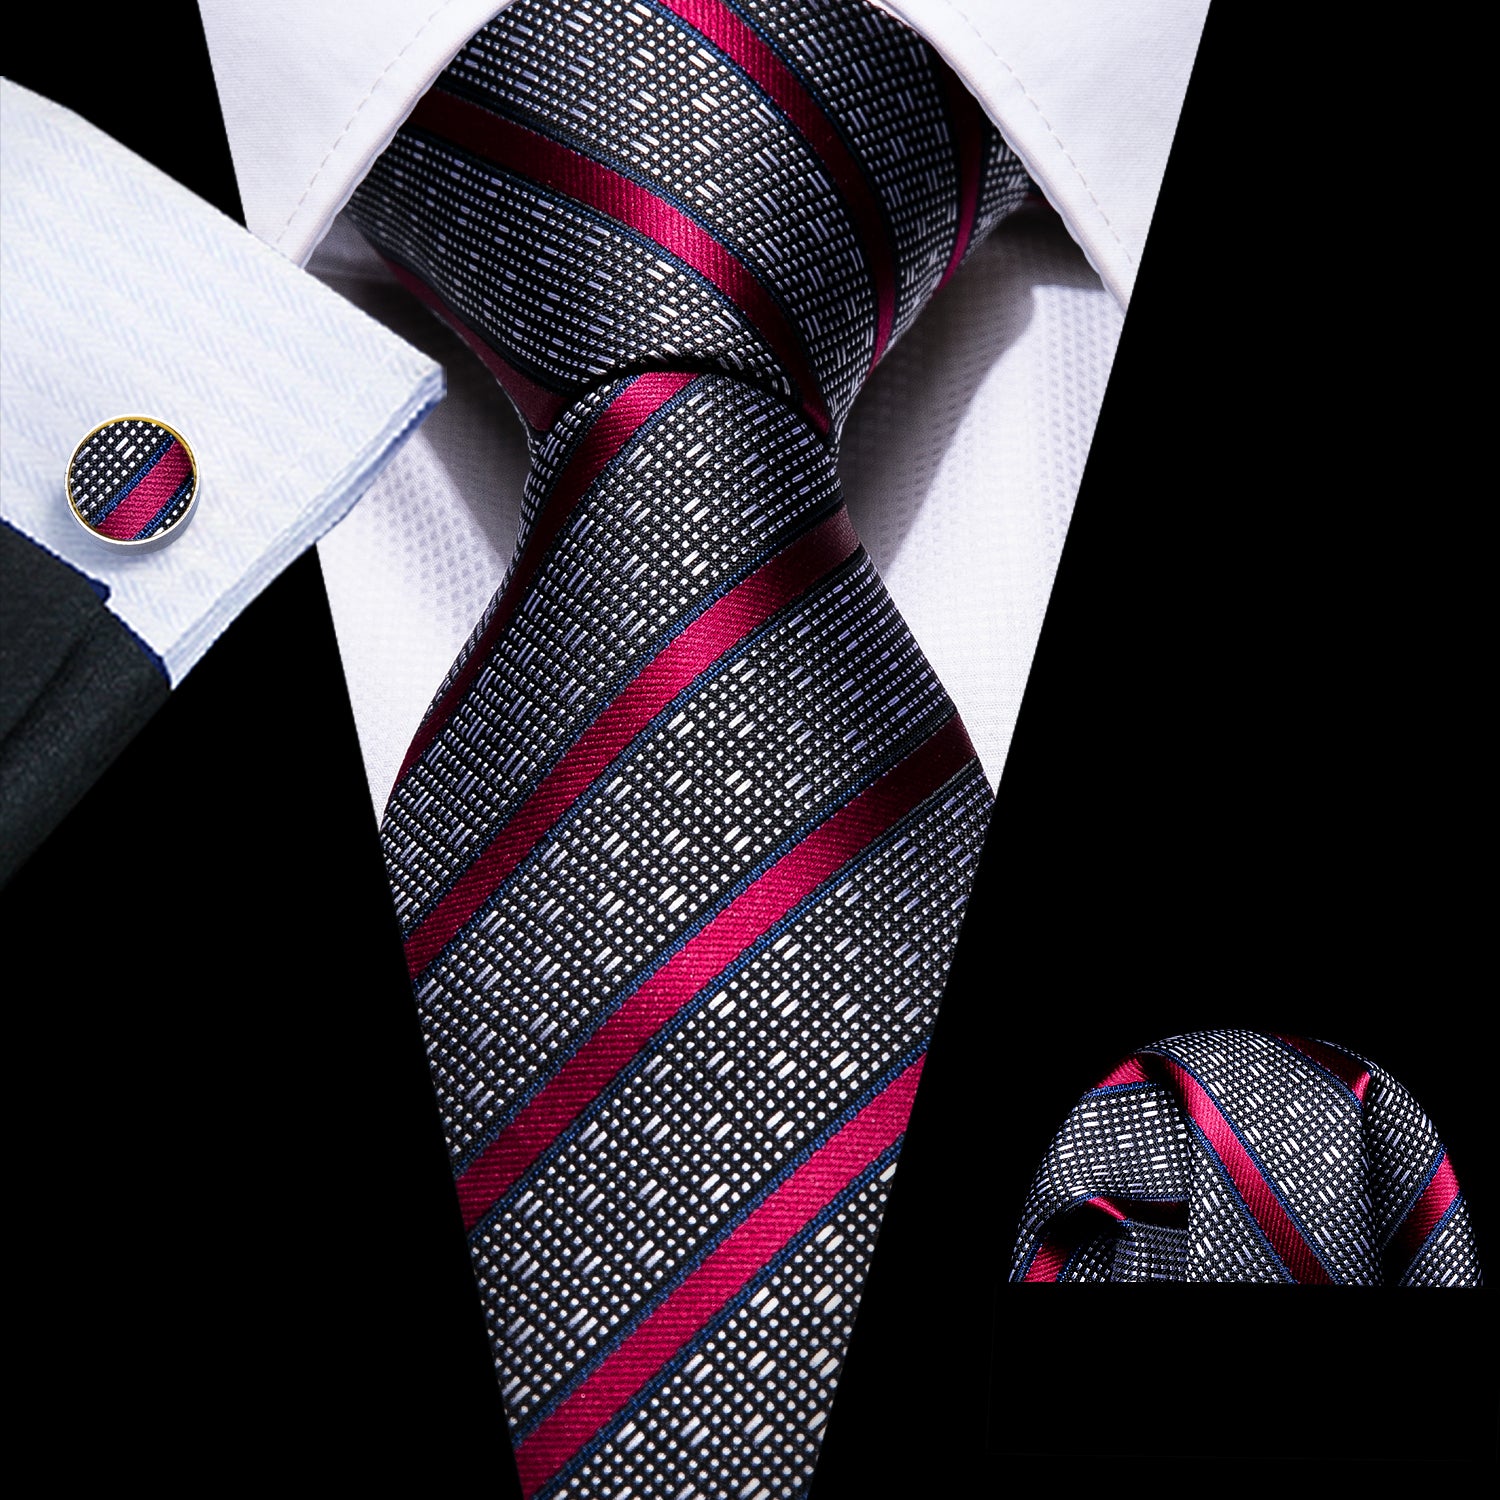 Barry.wang Grey Tie Red Striped Silk Necktie Hanky Cufflinks Tie Clip Set 4PC